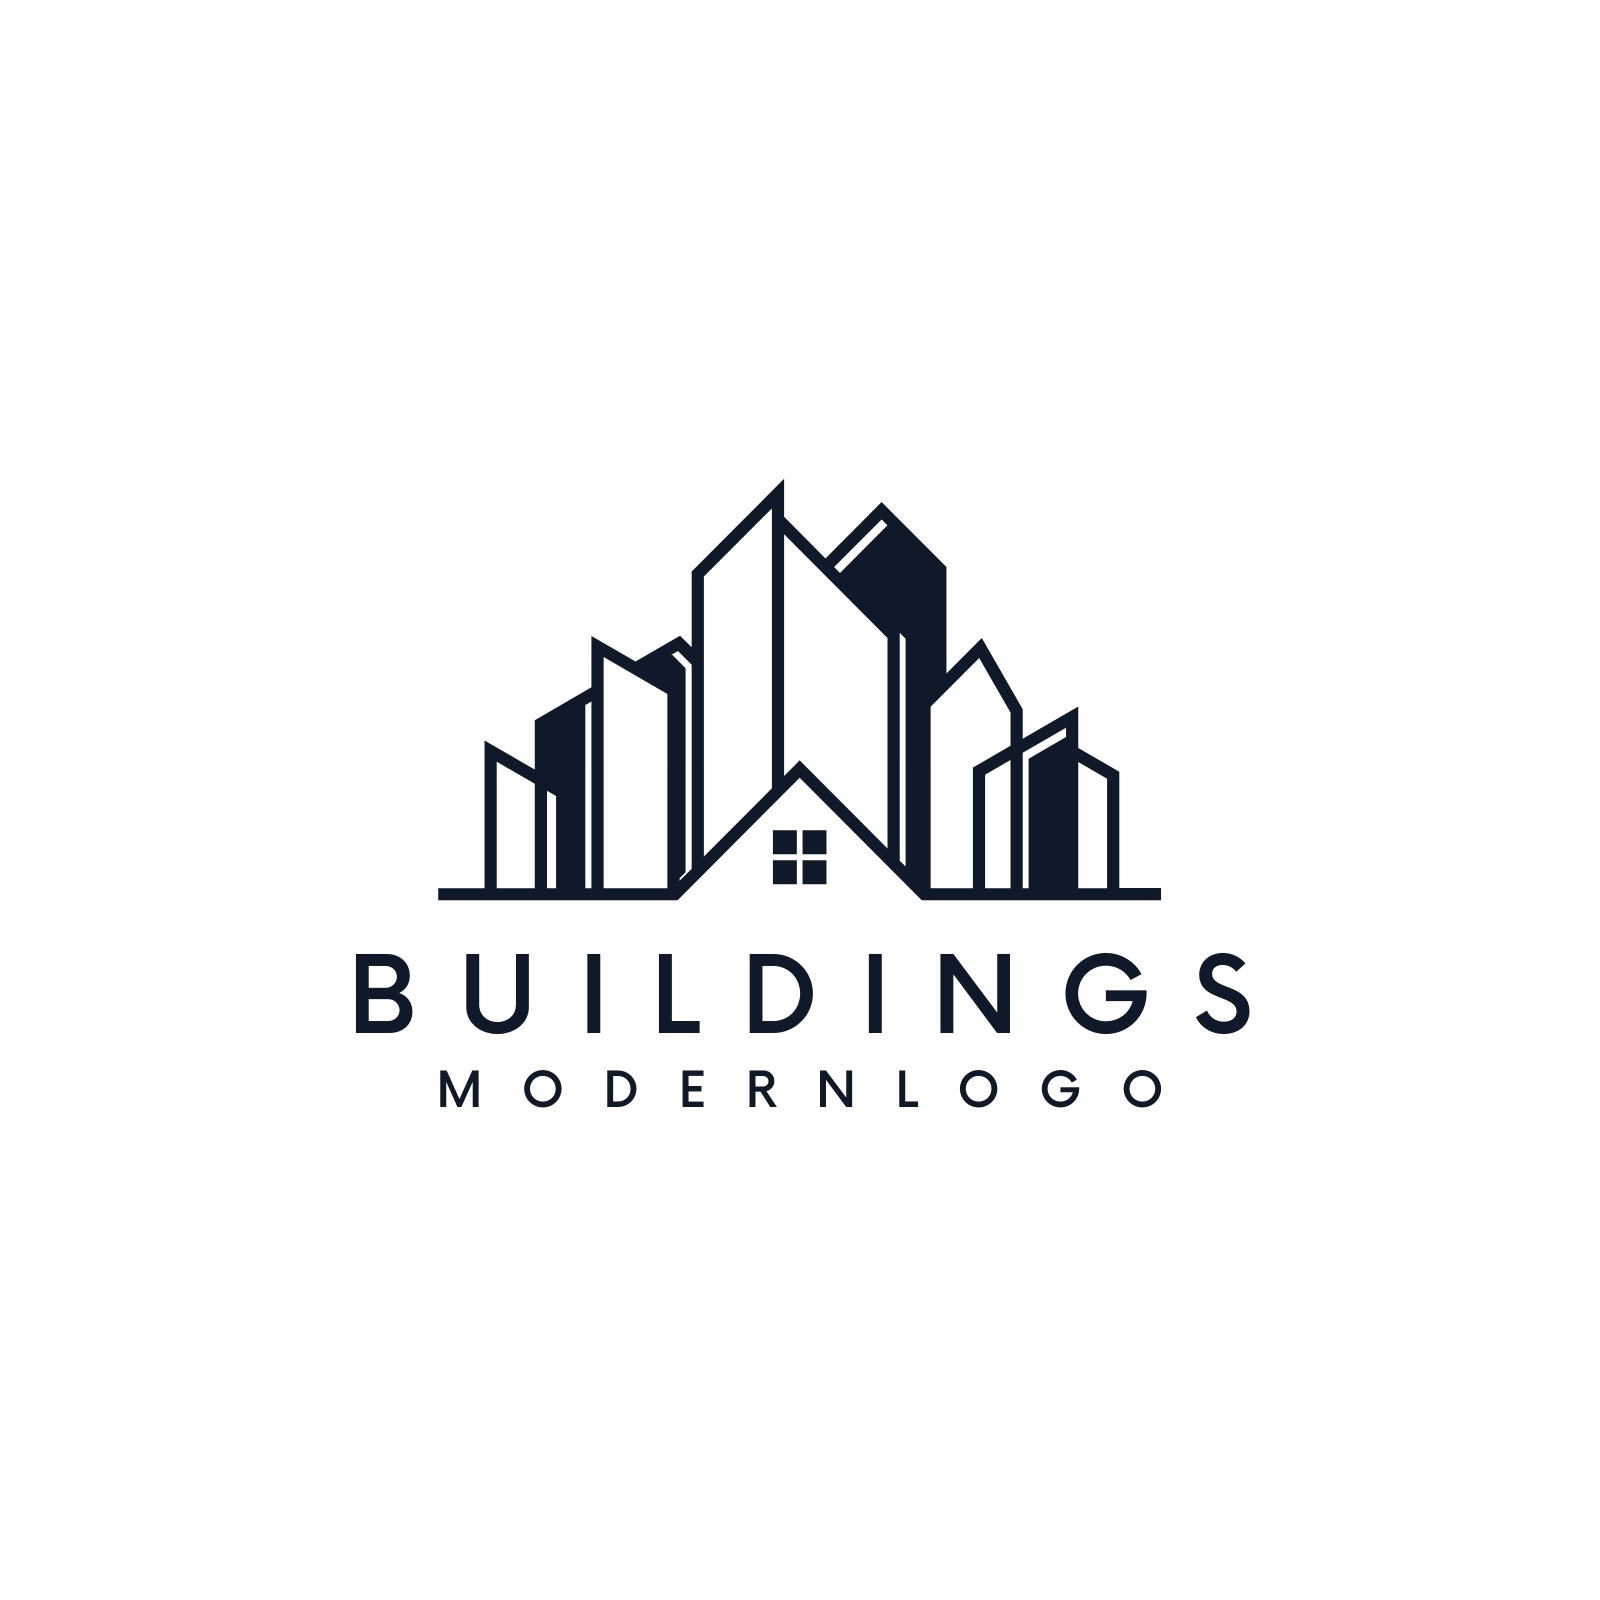 black building logo